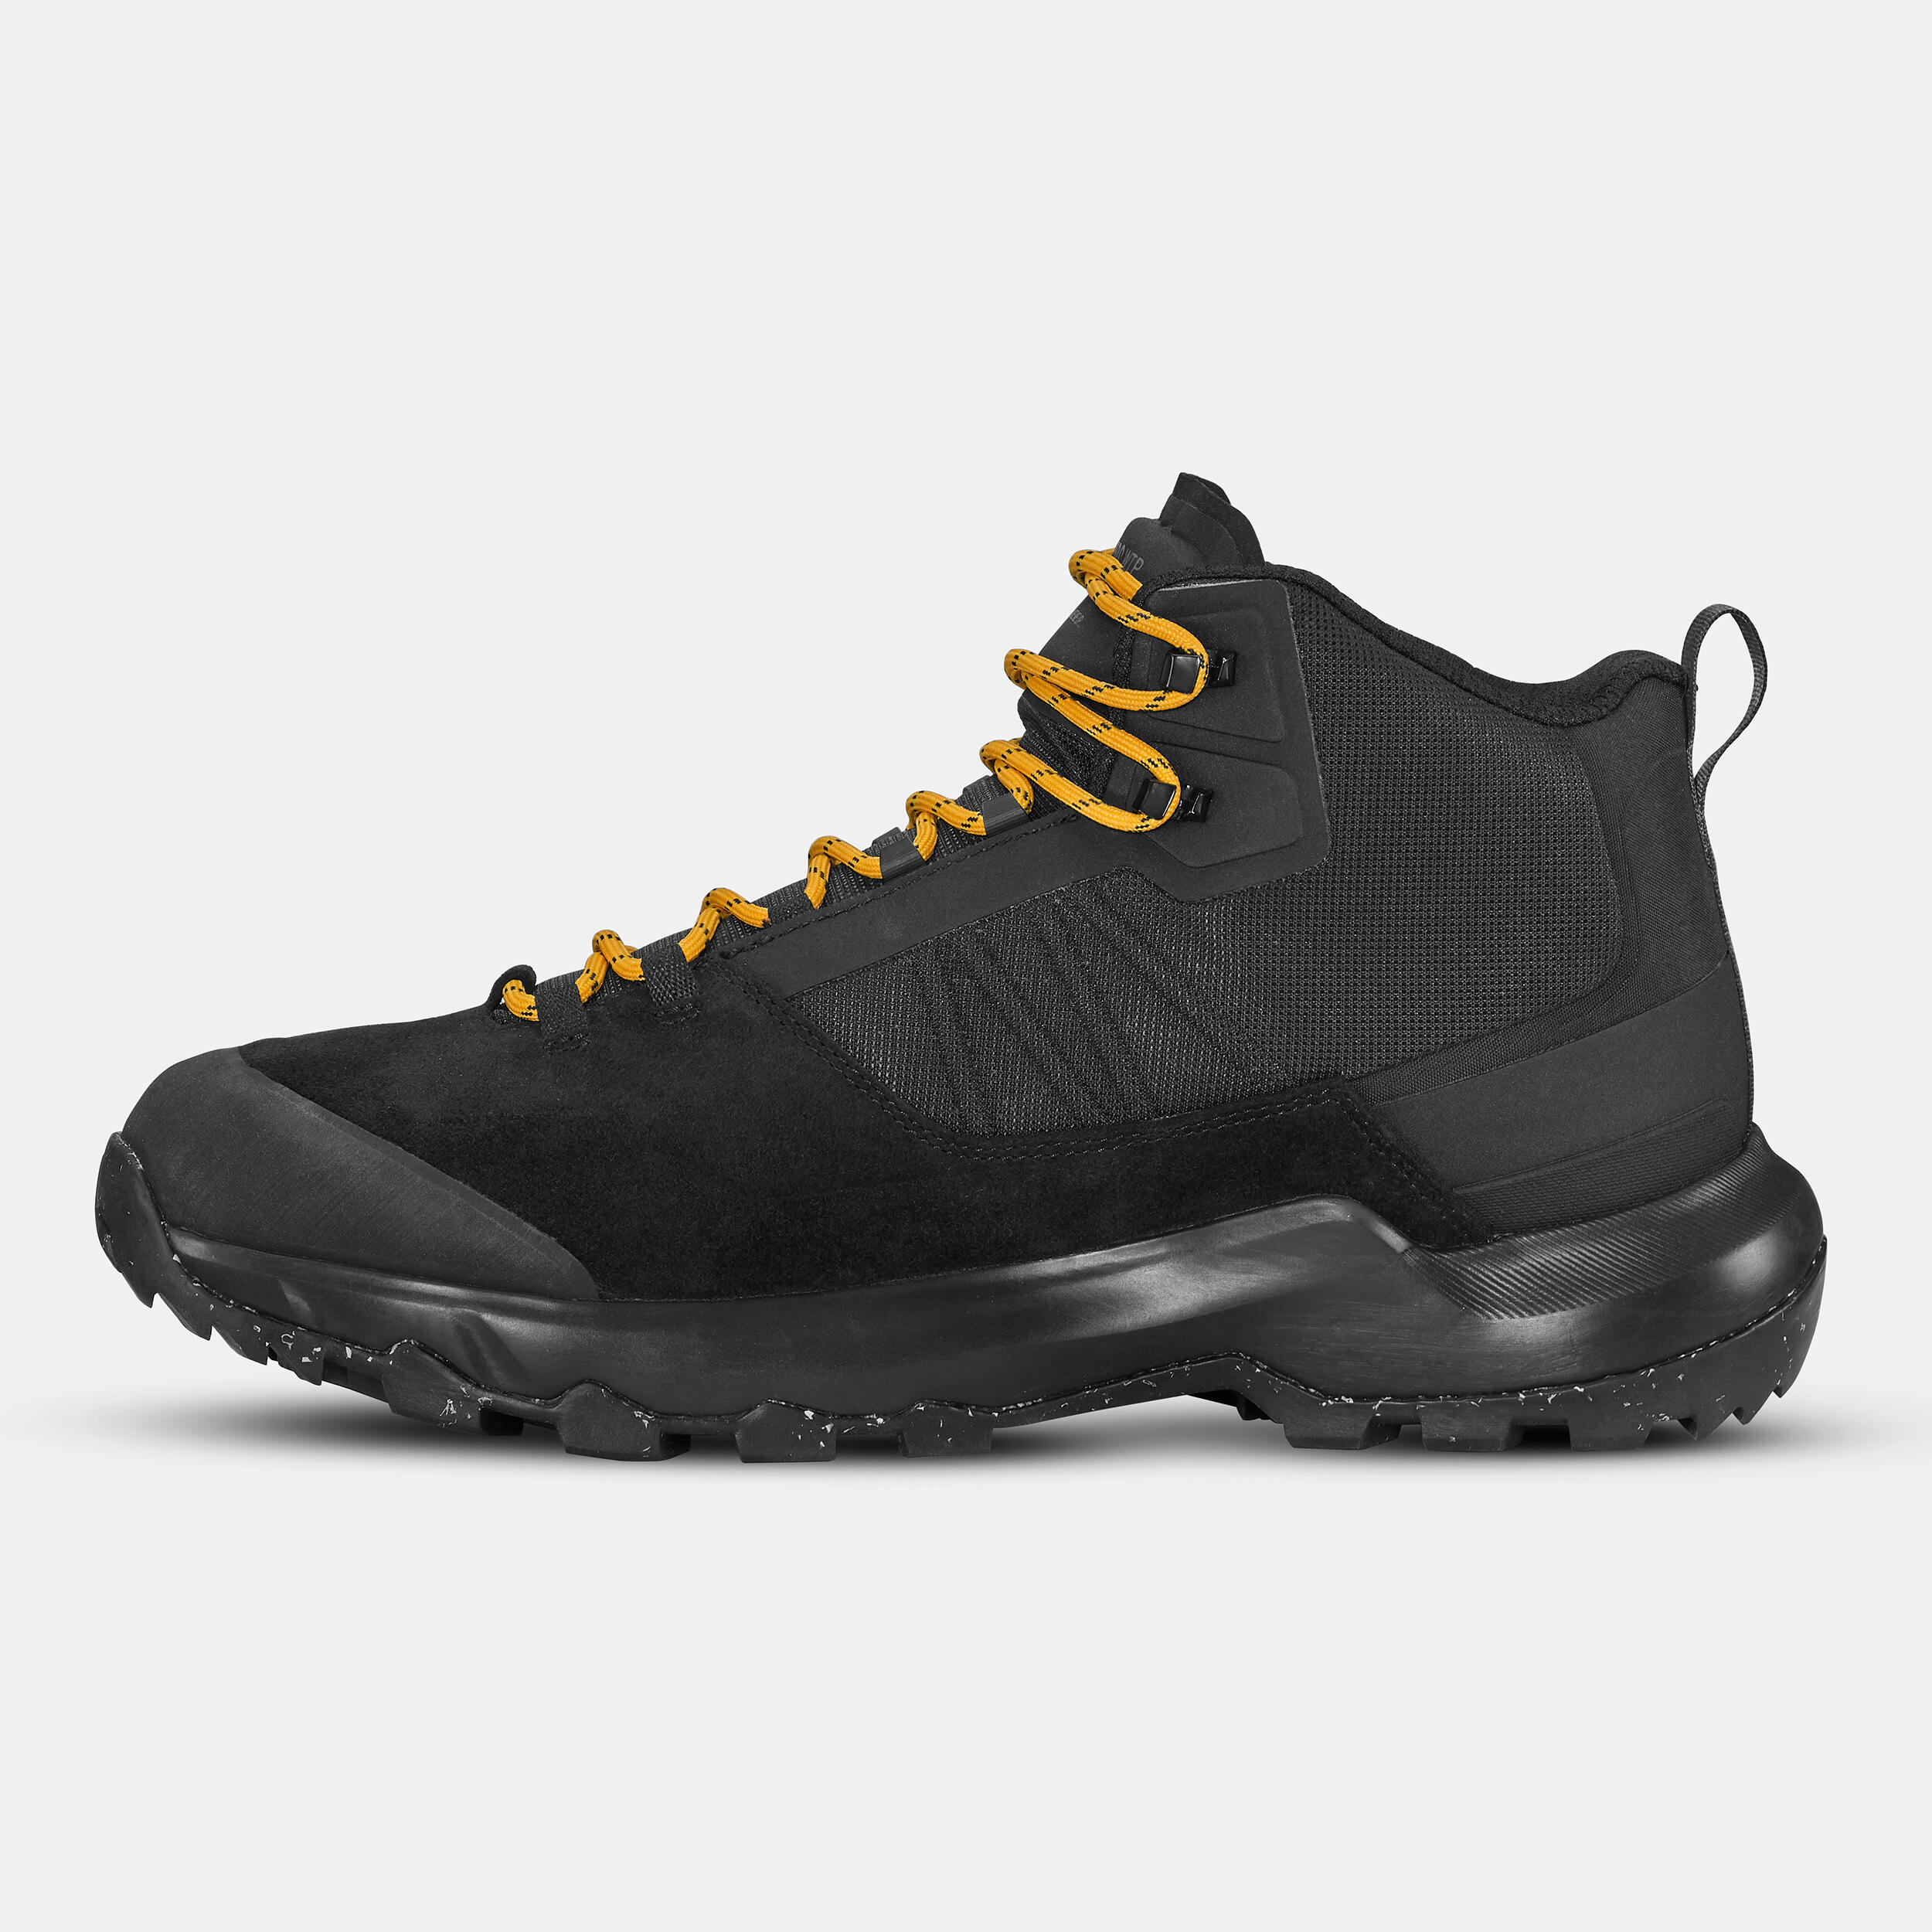 Men's Waterproof Mountain Walking Shoes - MH500 Mid - Black 5/7